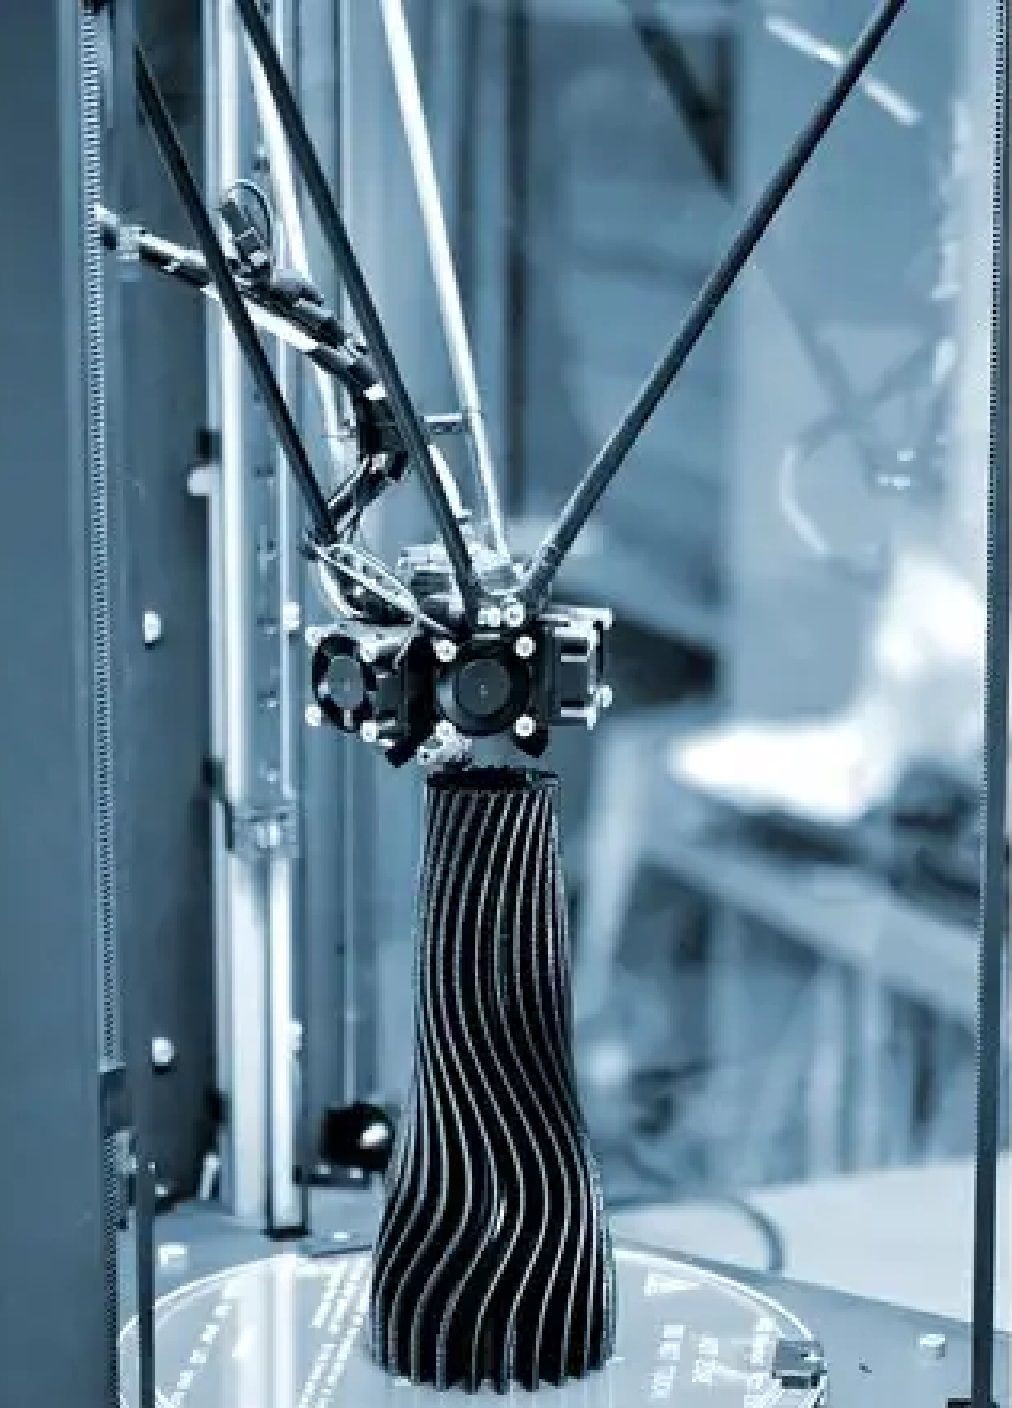 3D нить для 3D-печати ручки принтера из эко пластика без запаха на катушке бобине шпуле (476472-Prob) Черная Unbranded (282954018)